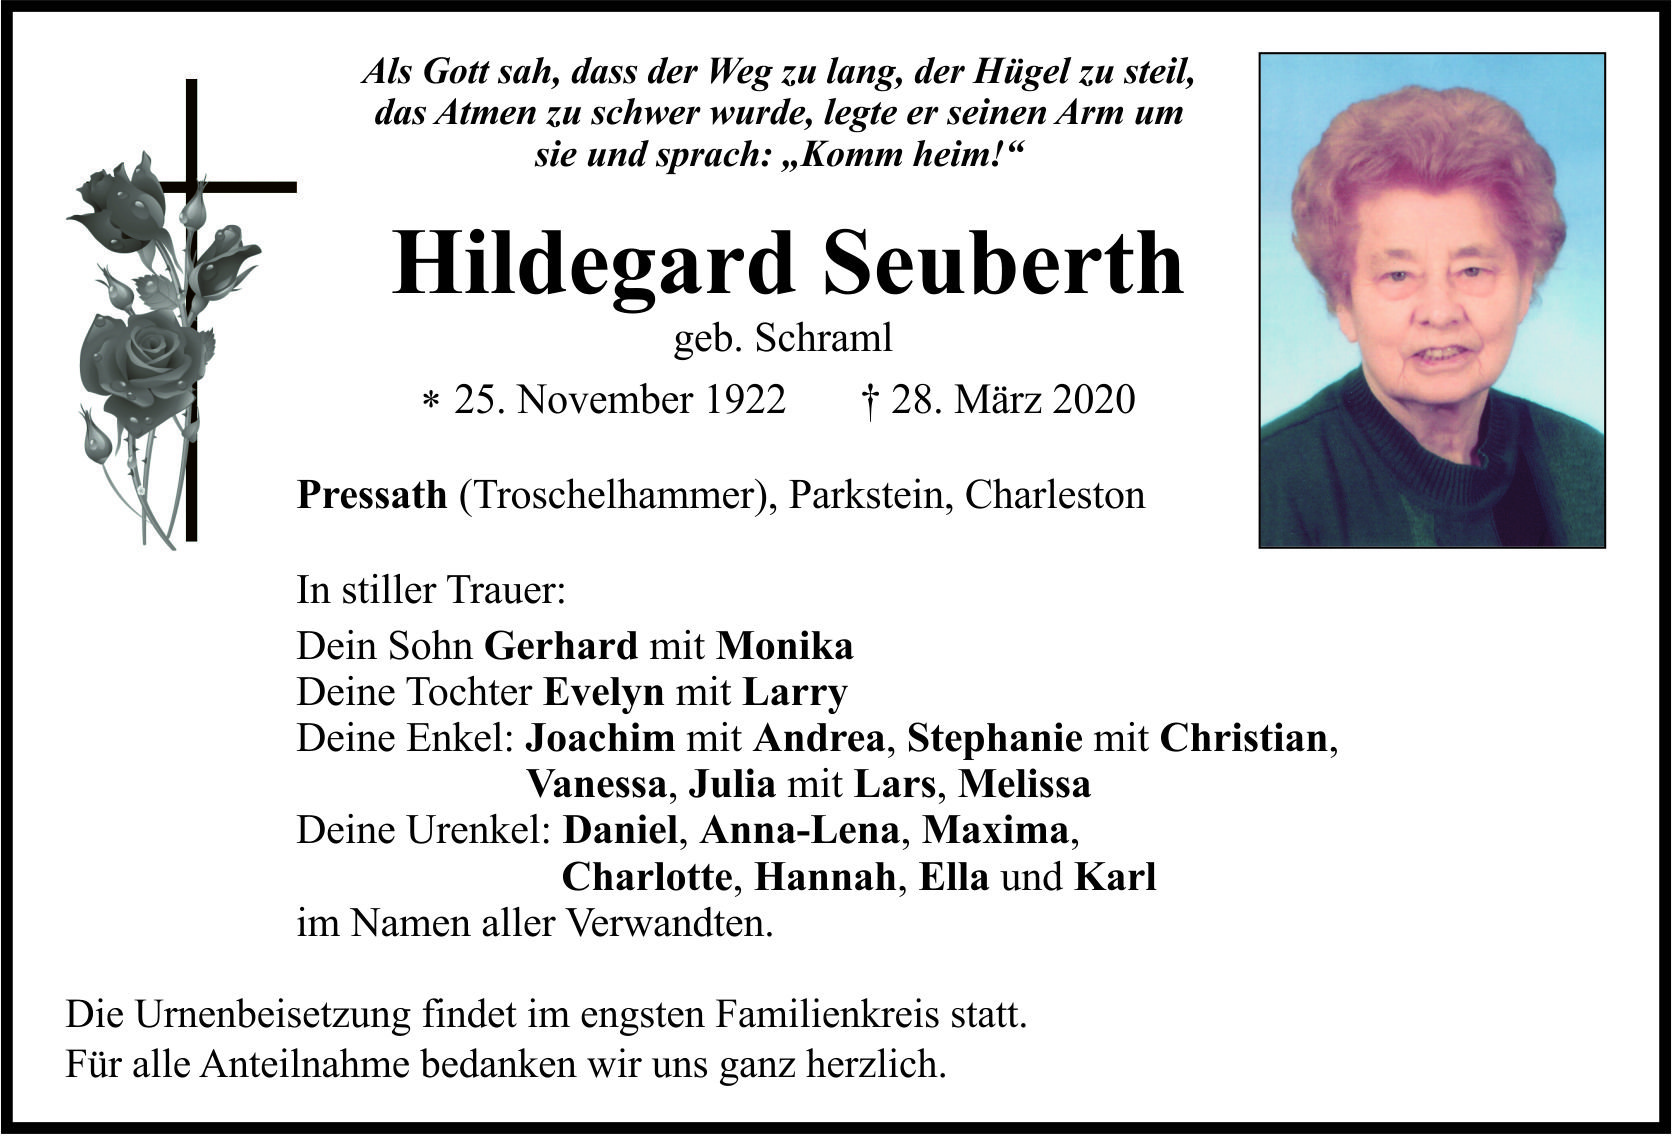 Traueranzeige Hildegard Seuberth